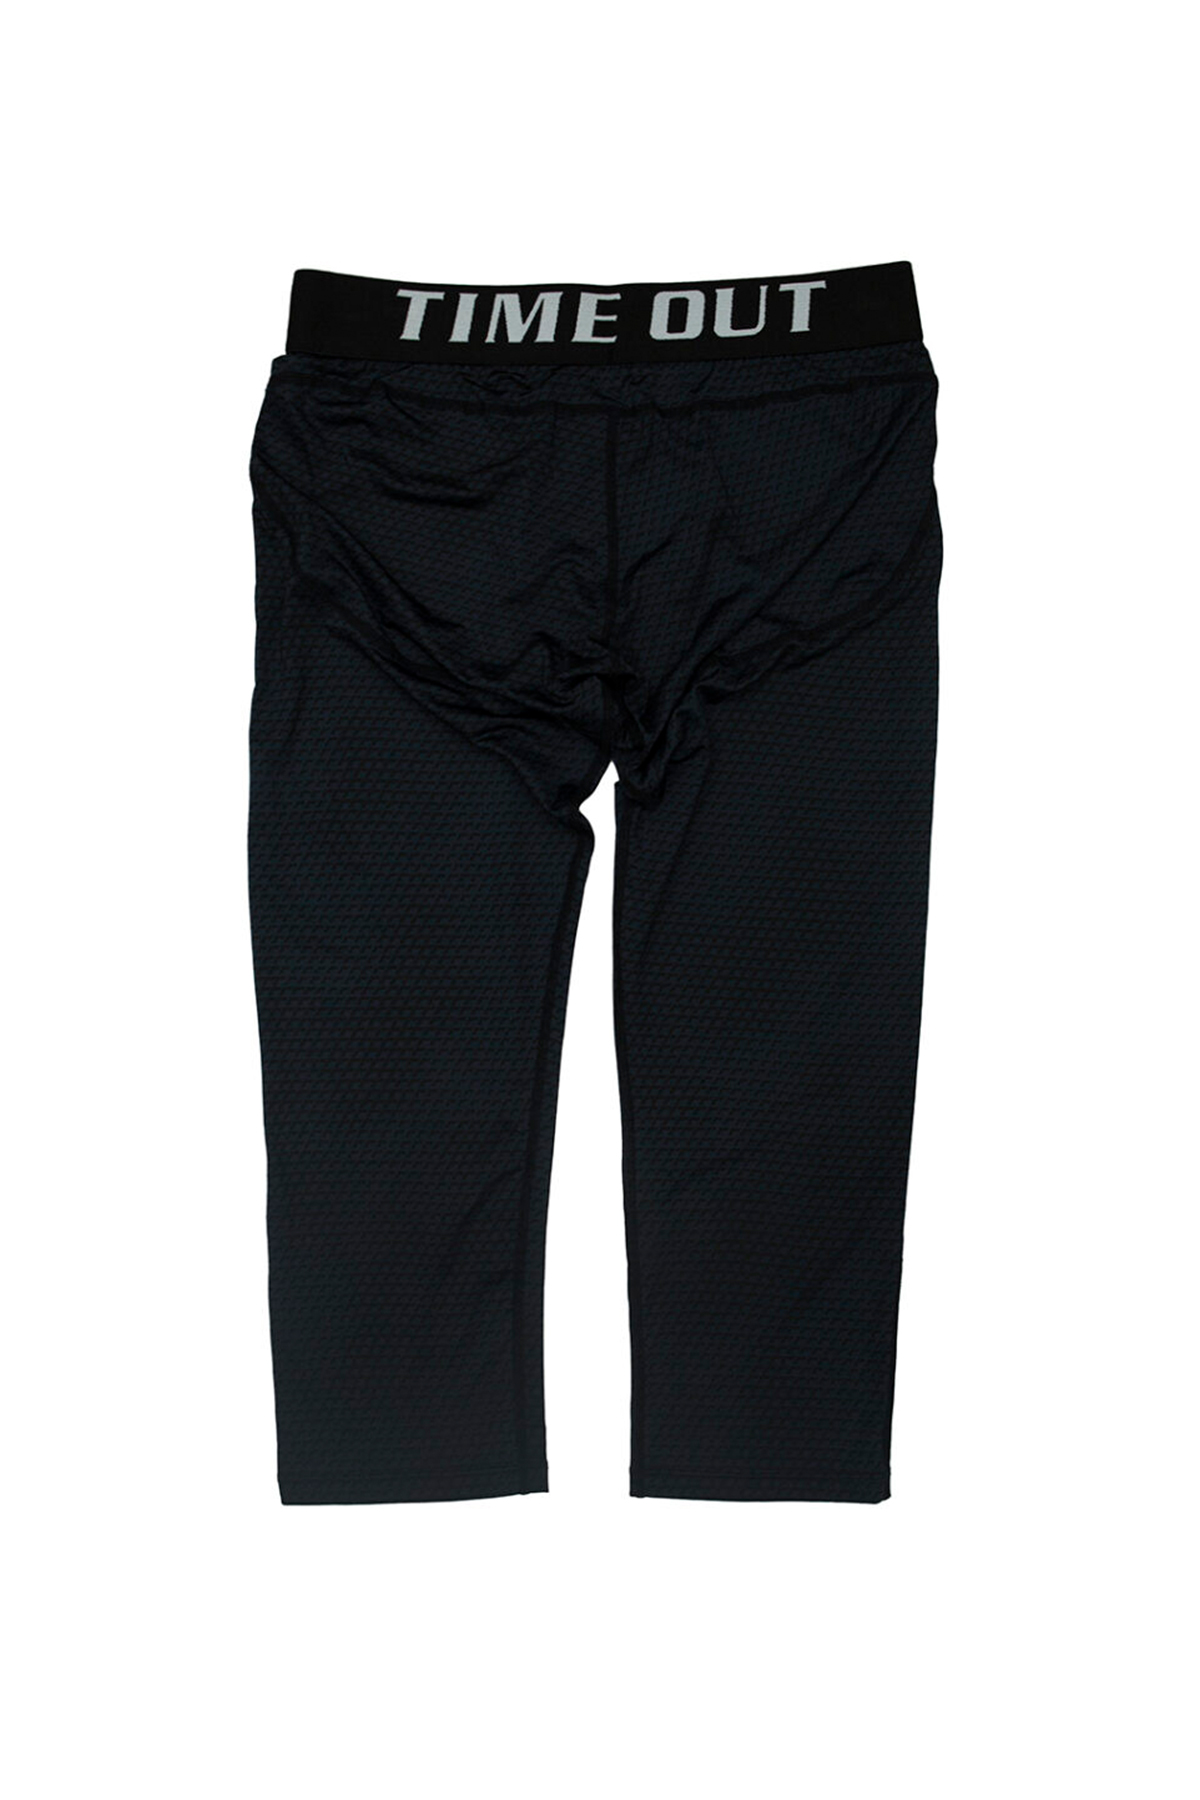 Time-Out-X-Men’s-Long-Gym-Shorts—Black—Back